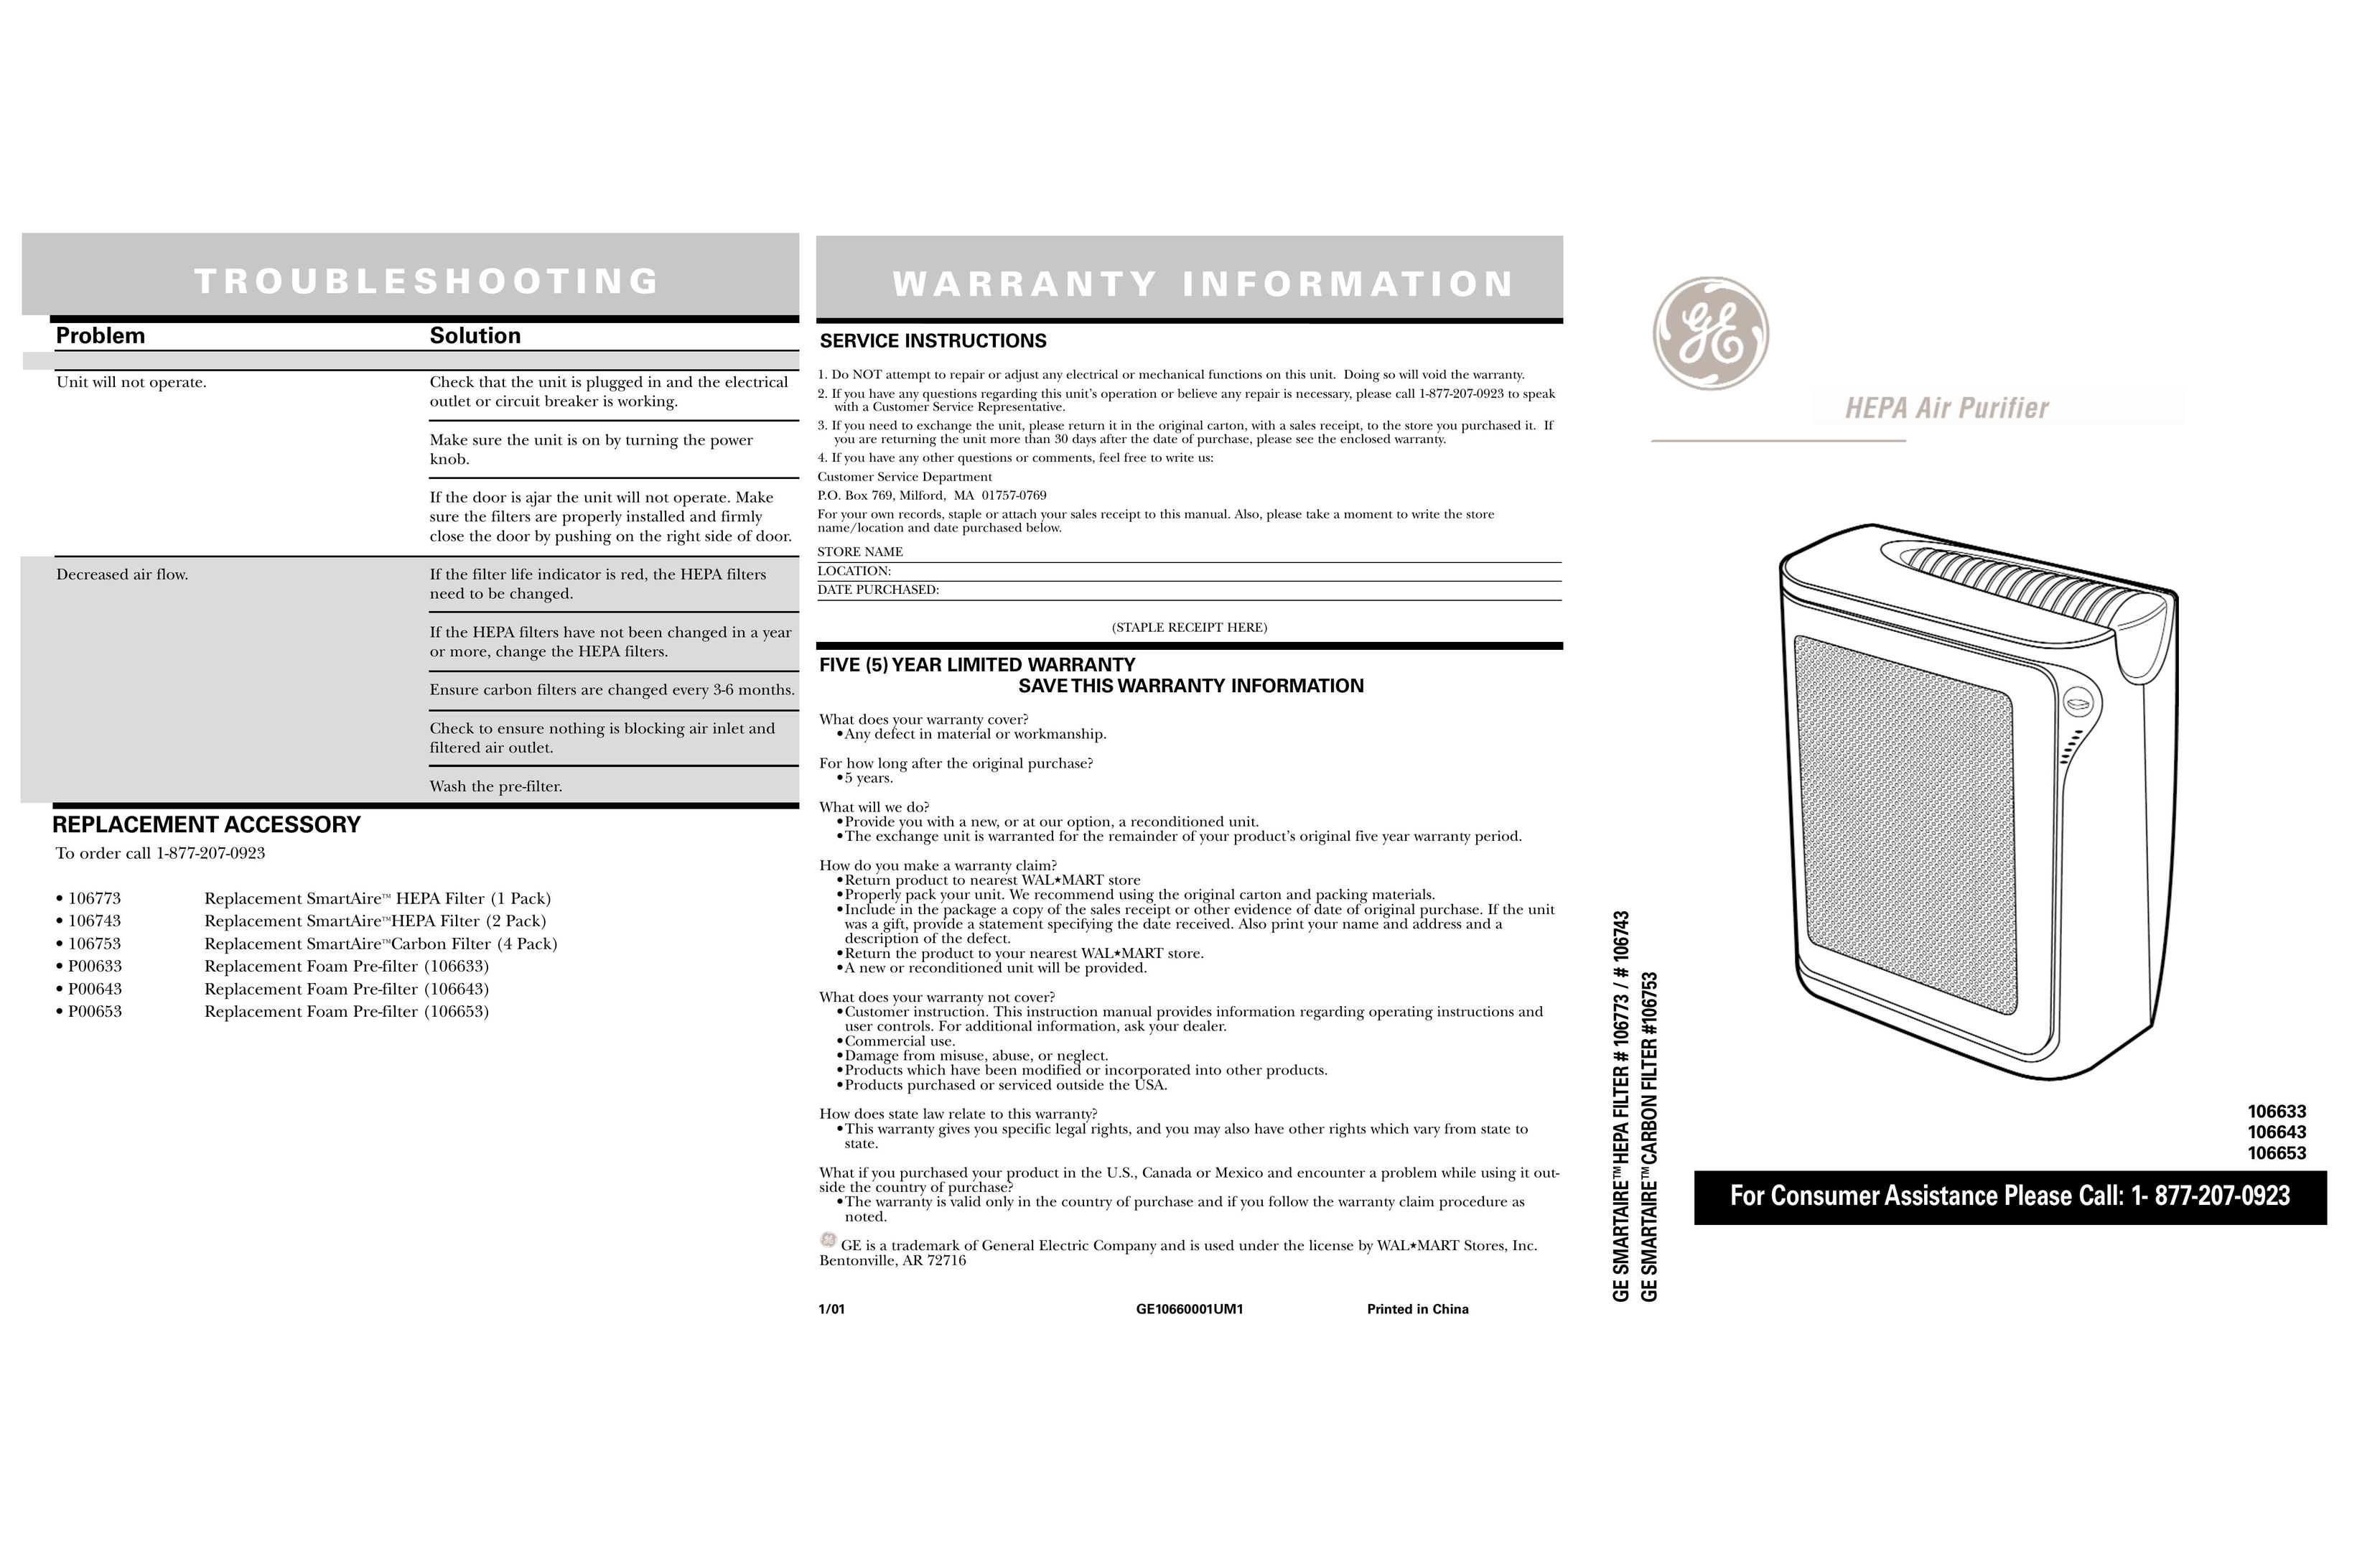 GE 106643 Indoor Furnishings User Manual